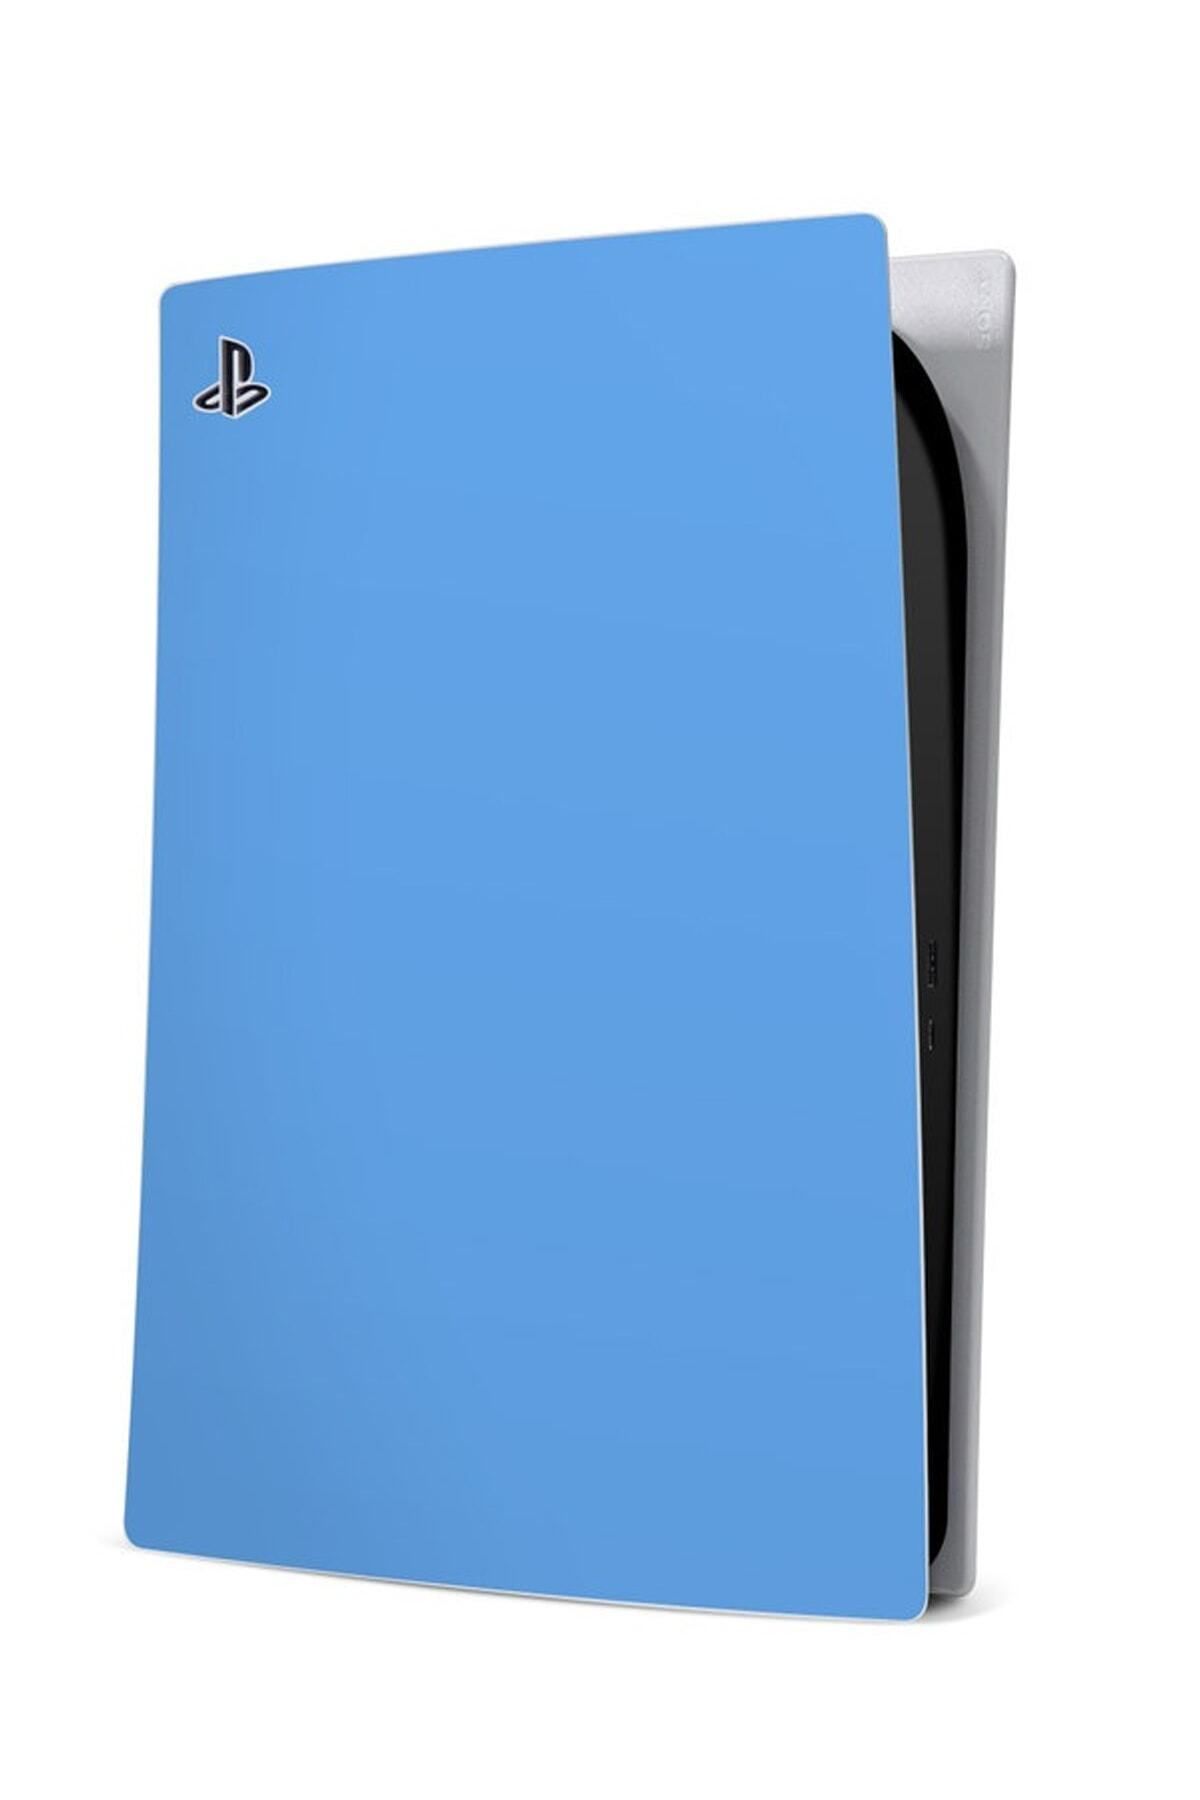 Kt Grup Playstation 5 Standart Uyumlu Dijital Versiyon Modern Solid Renkler Full Sticker Kaplama